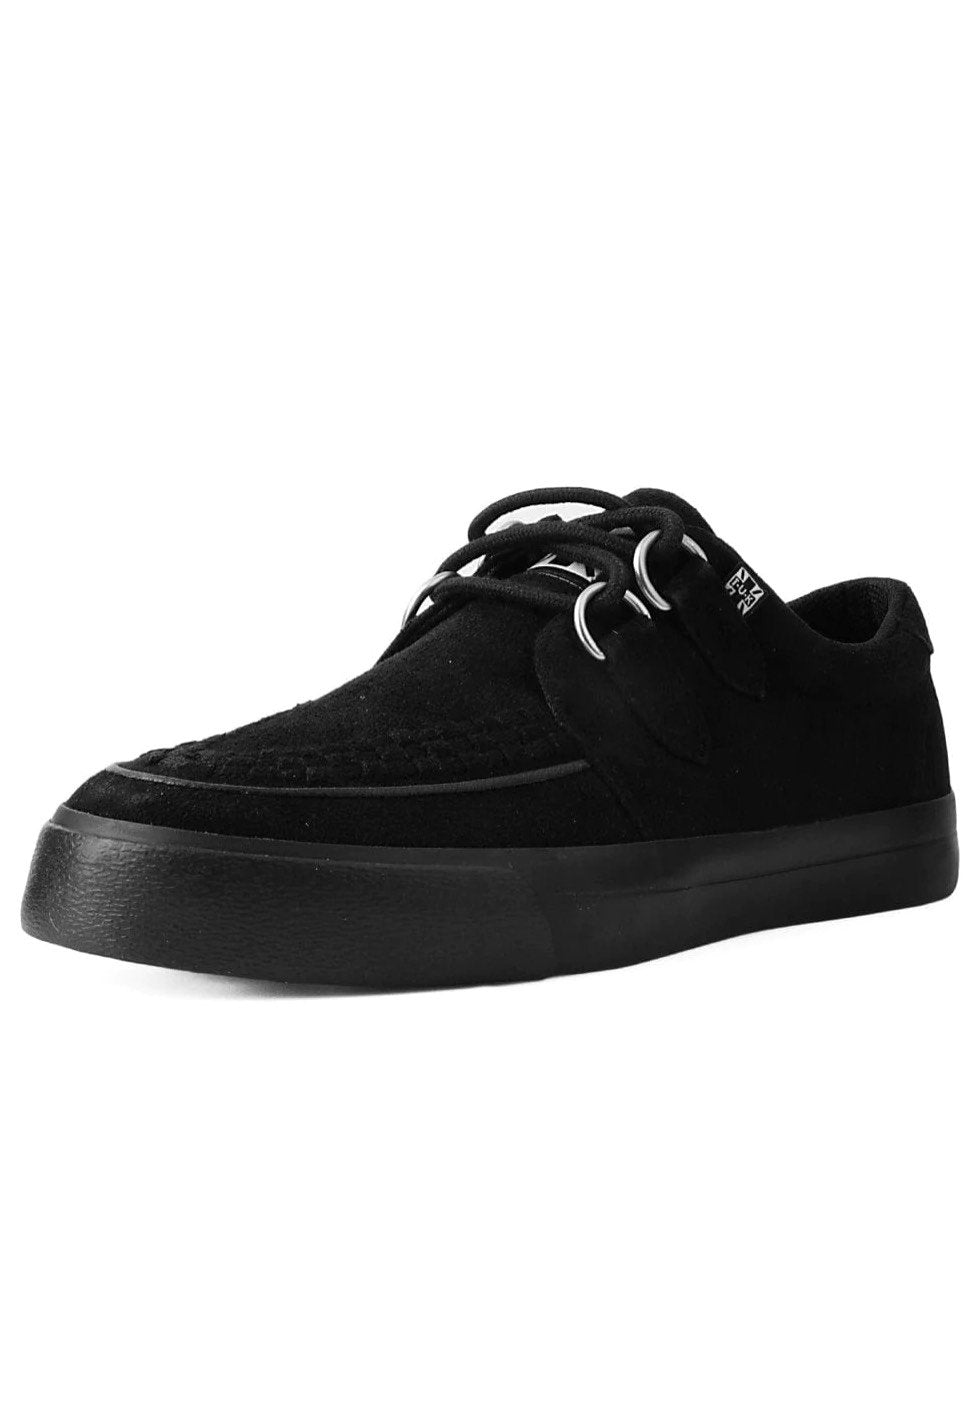 T.U.K. - Creeper Sneaker Black Faux Suede - Shoes